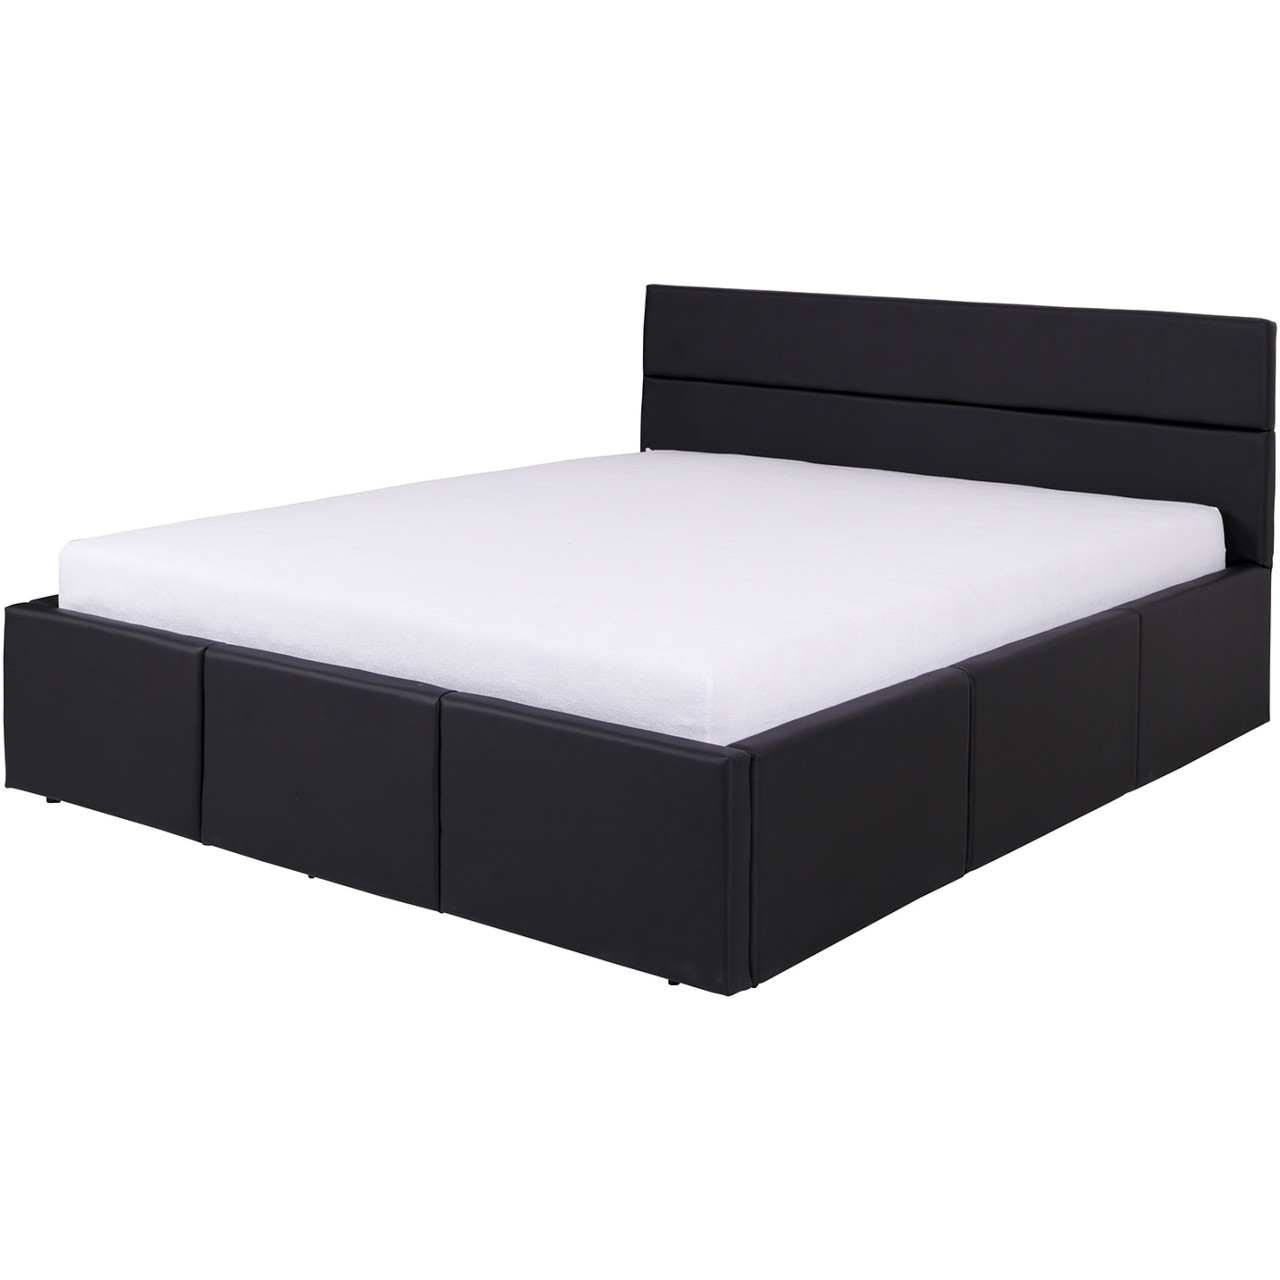 Bed 160x200 CALABRIA CL10 black